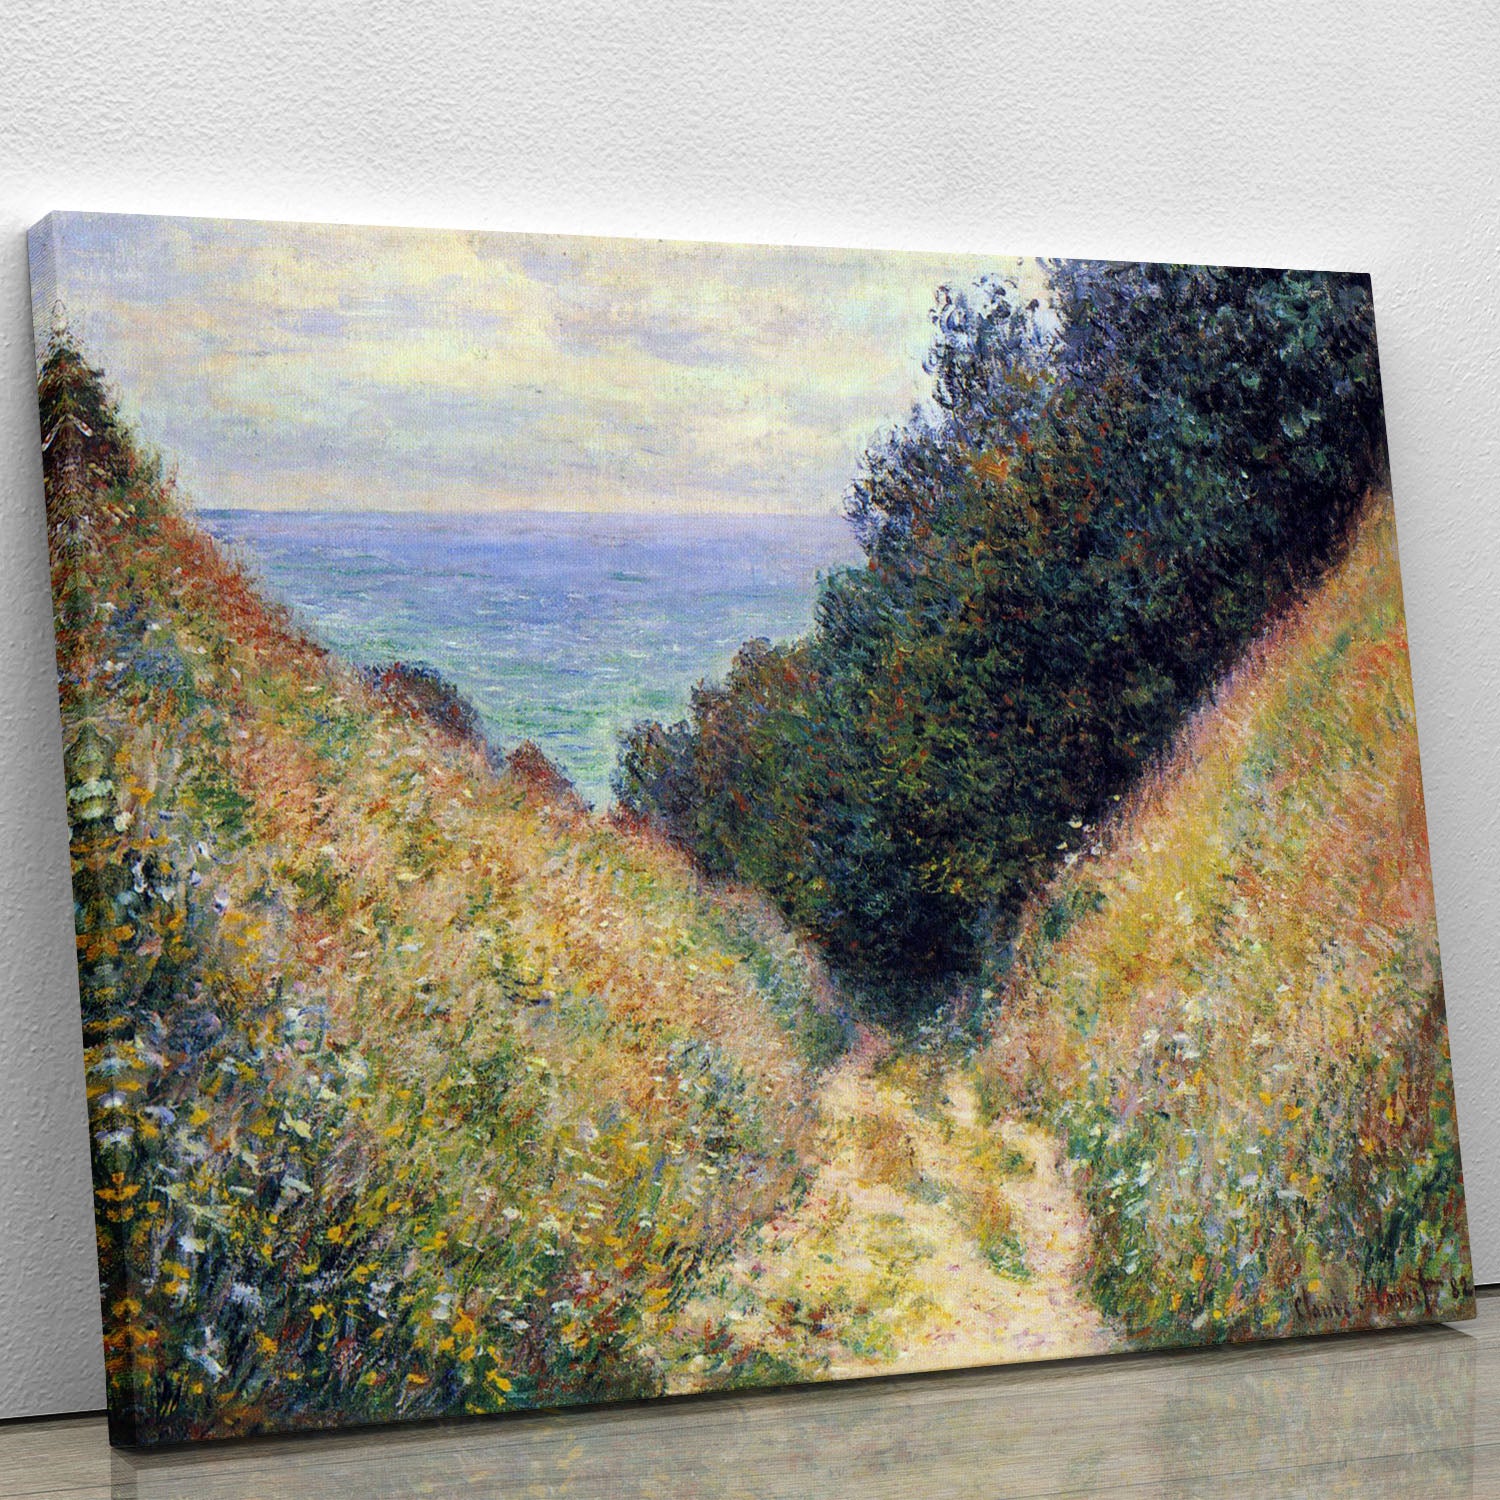 Pourville 1 by Monet Canvas Print or Poster - Canvas Art Rocks - 1